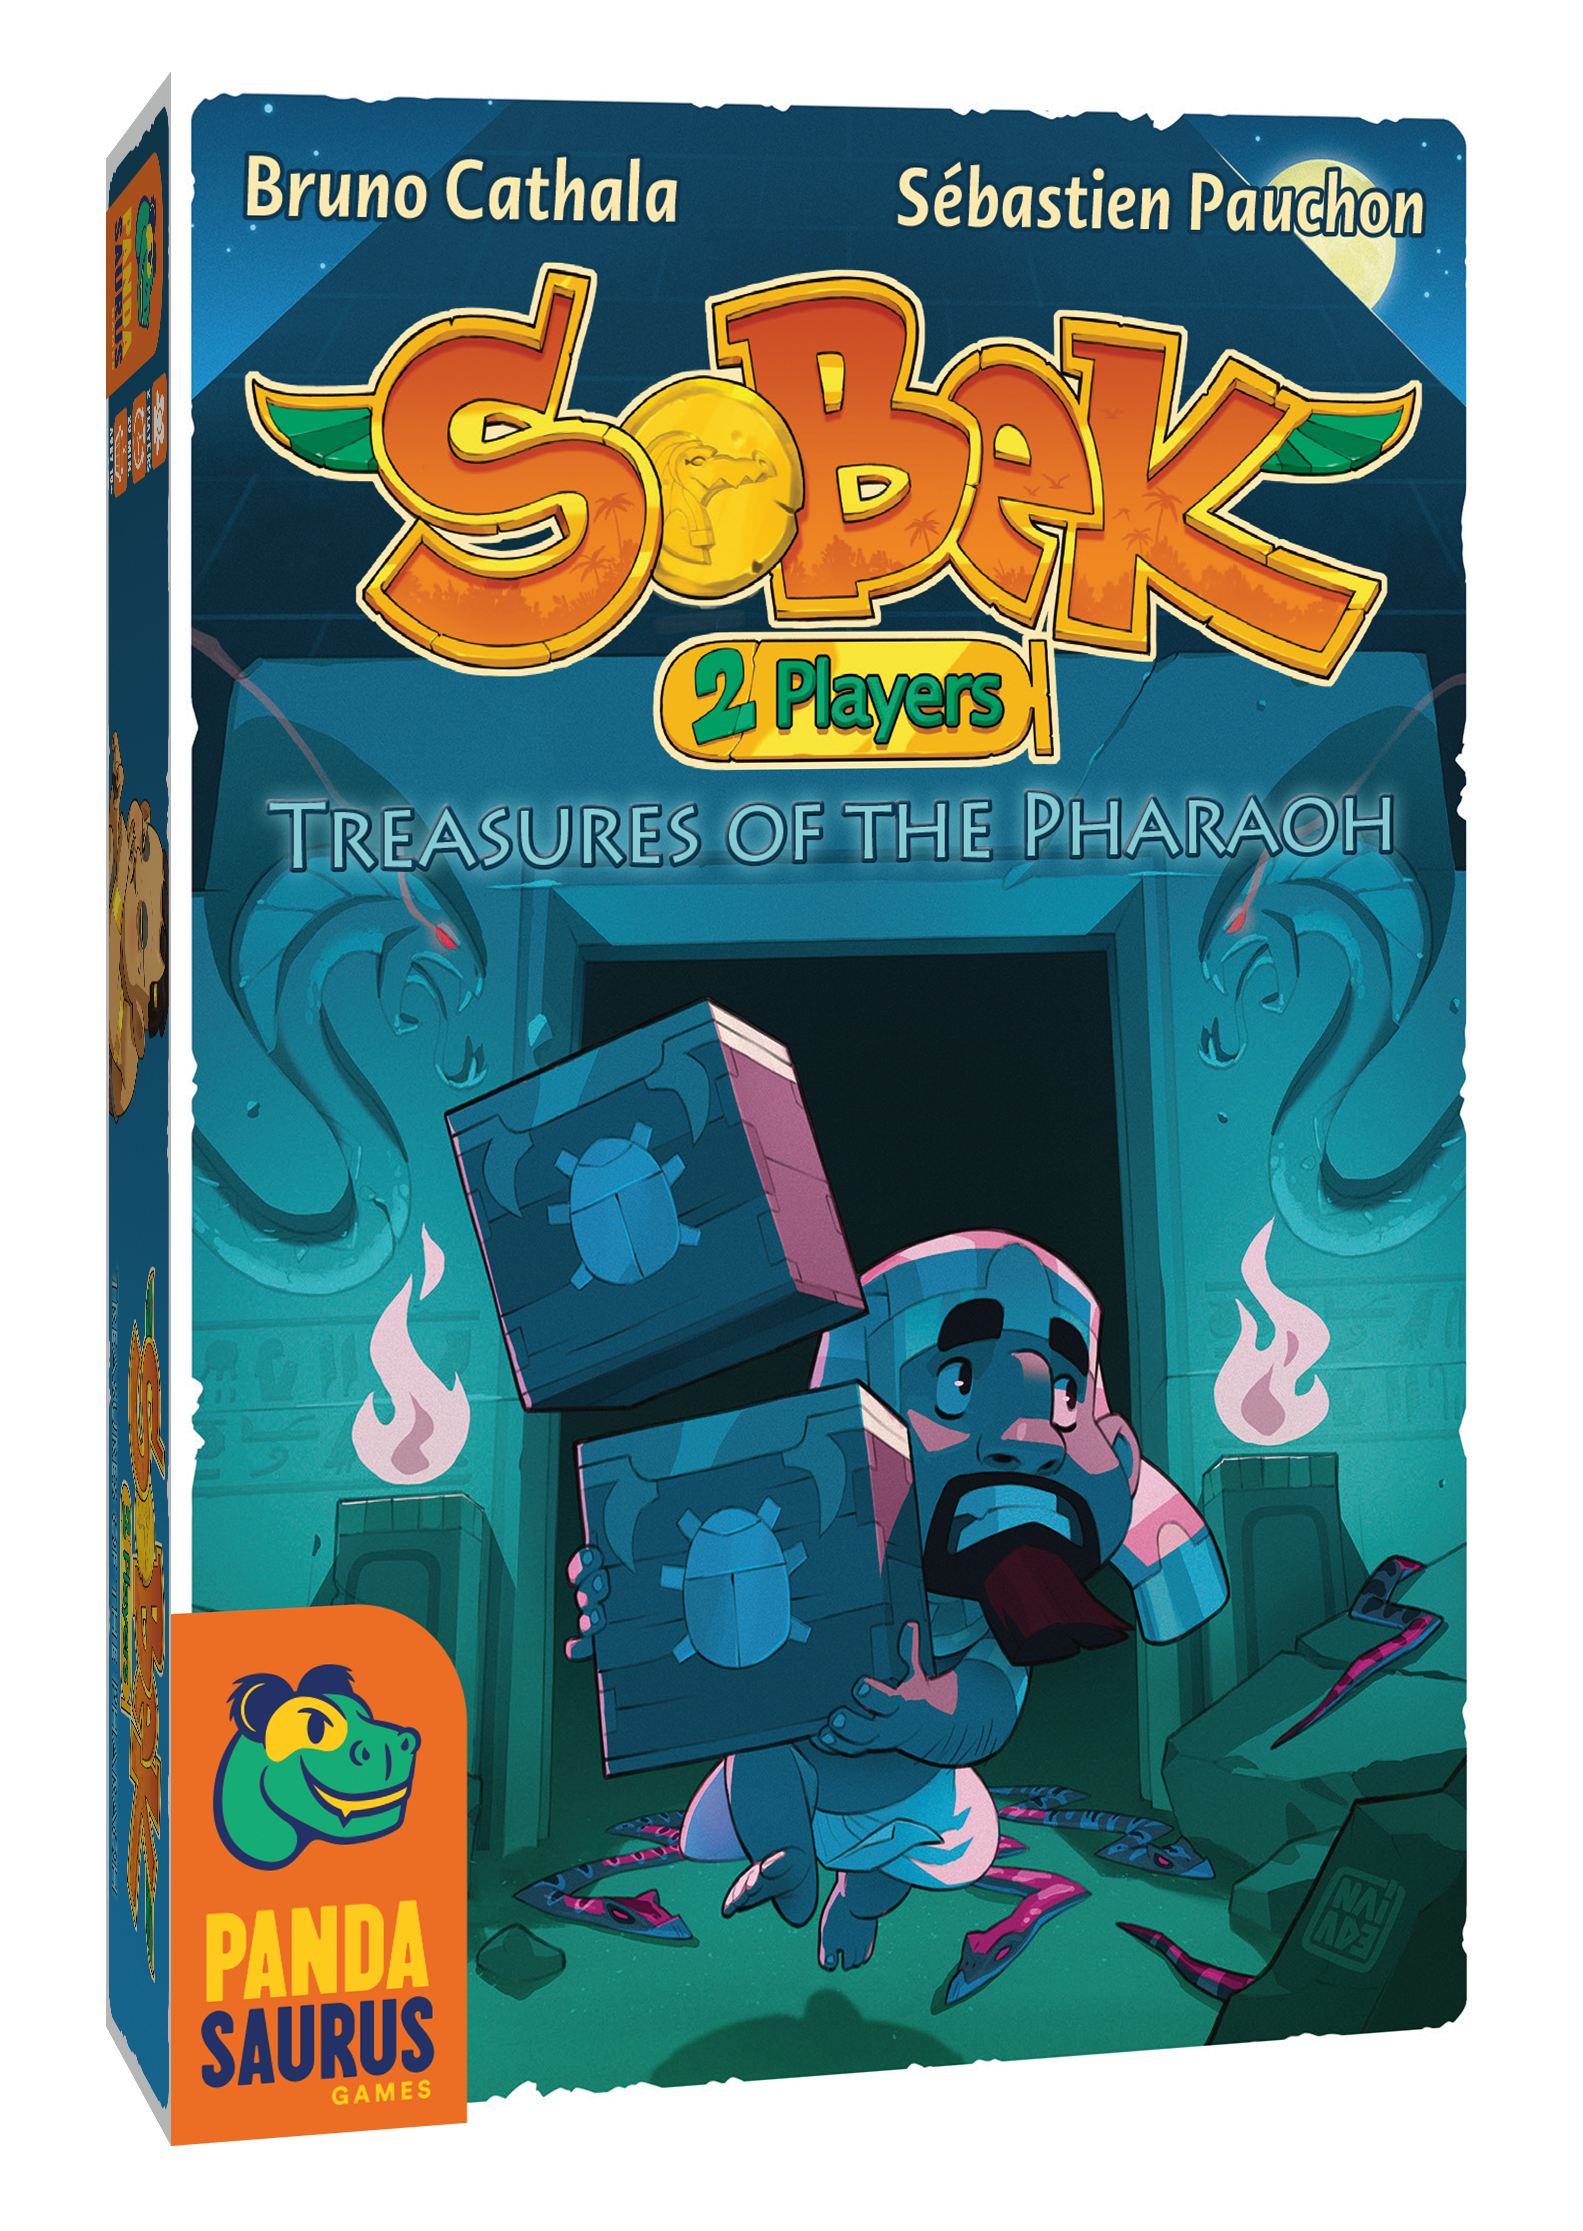 Sobek 2 Players: Treasures of the Pharaoh from Pandasaurus box